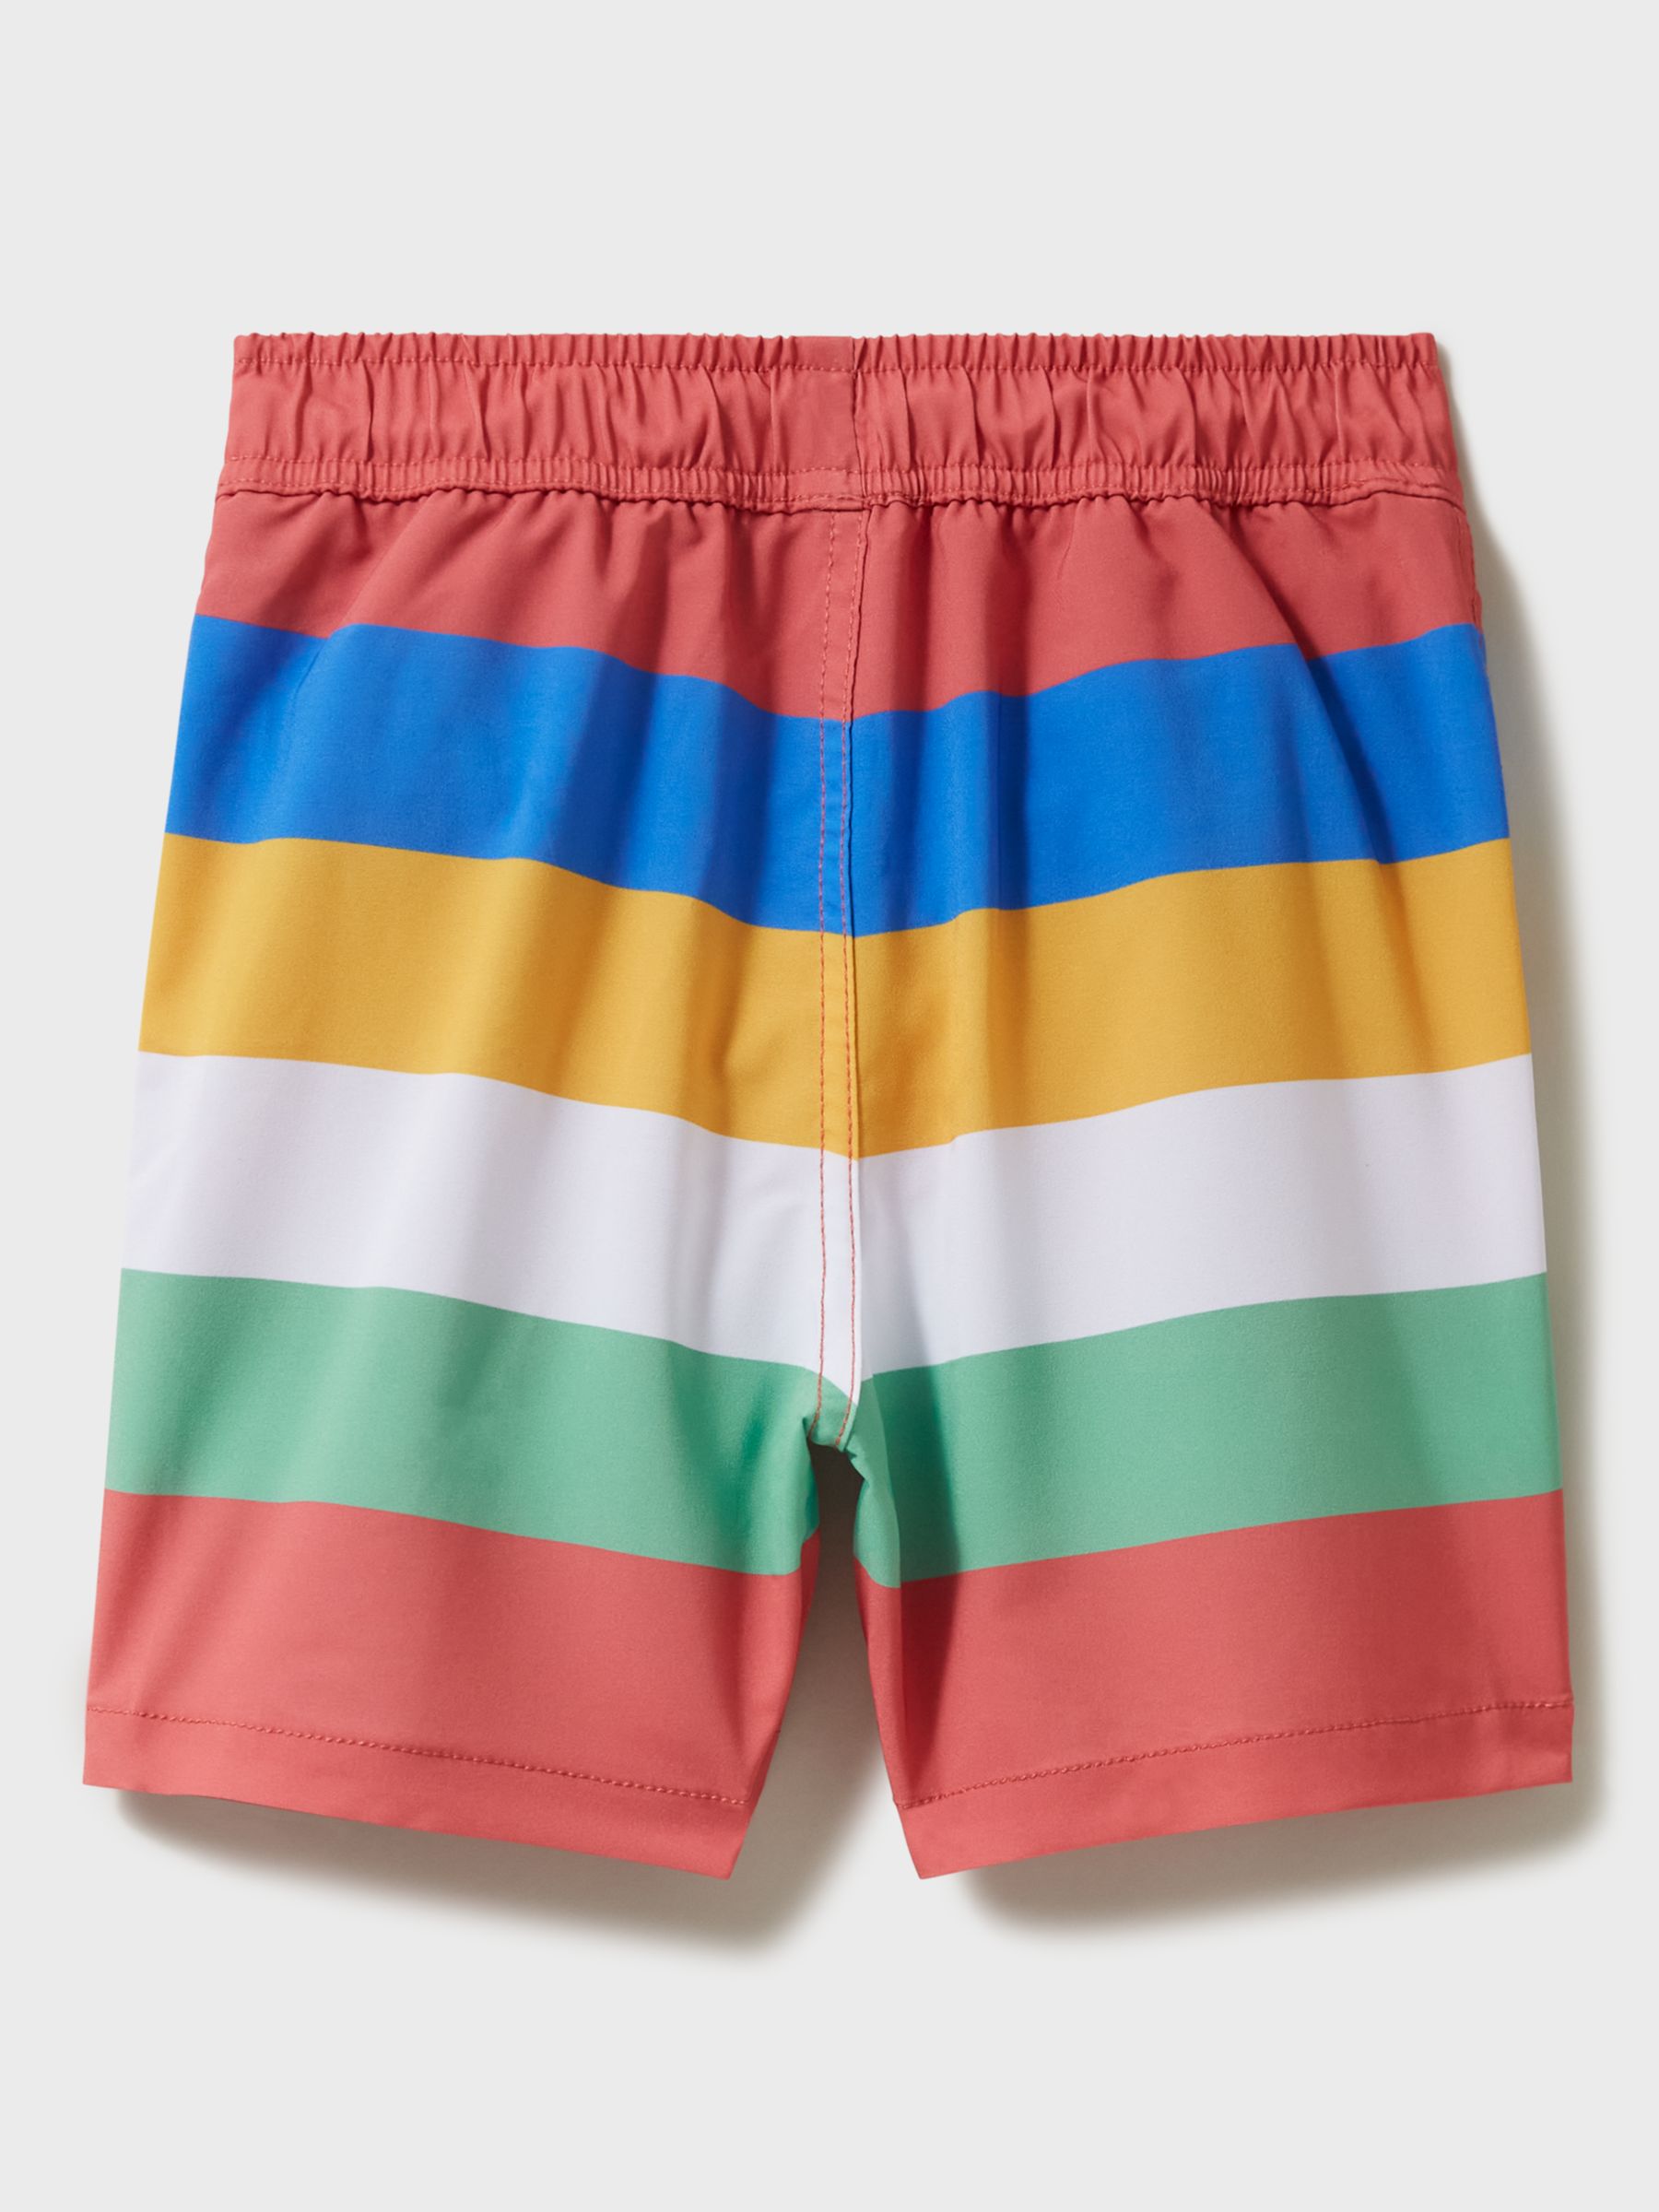 Crew Clothing Kids' Block Stripe Print Swim Shorts, Multi, 5-6 years